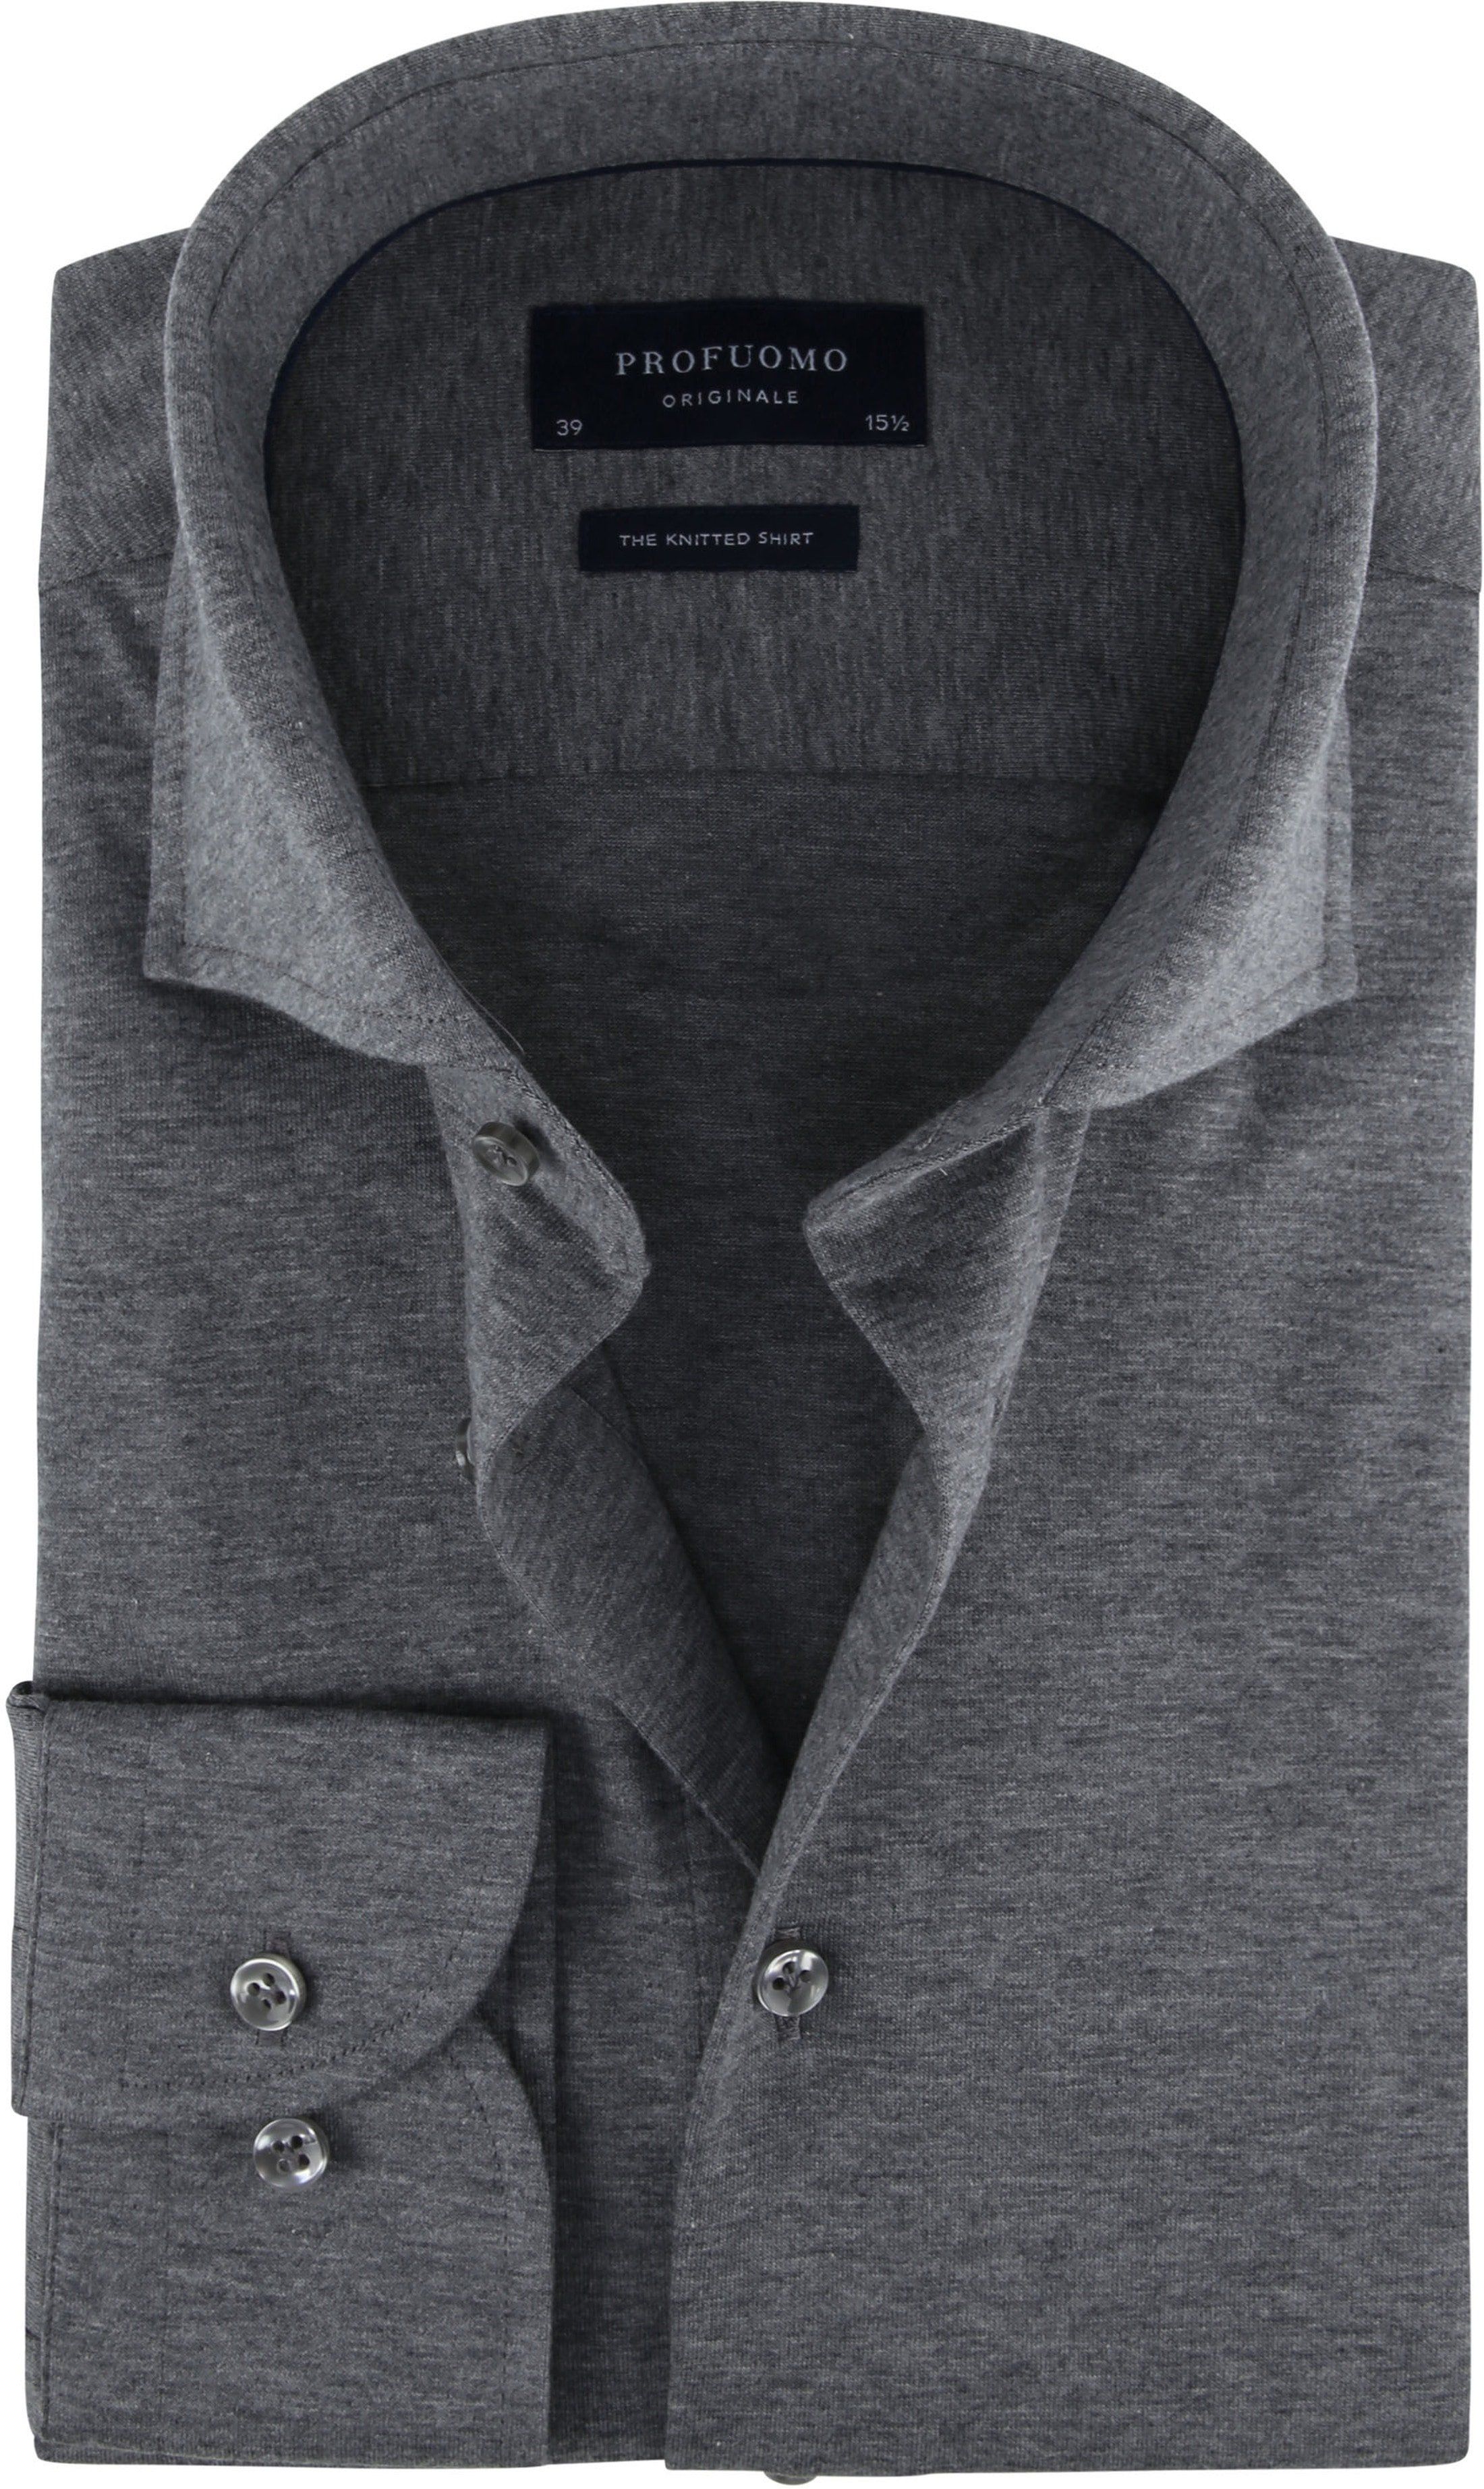 Profuomo Knitted Jersey Shirt Dark Grey Grey size 14.5